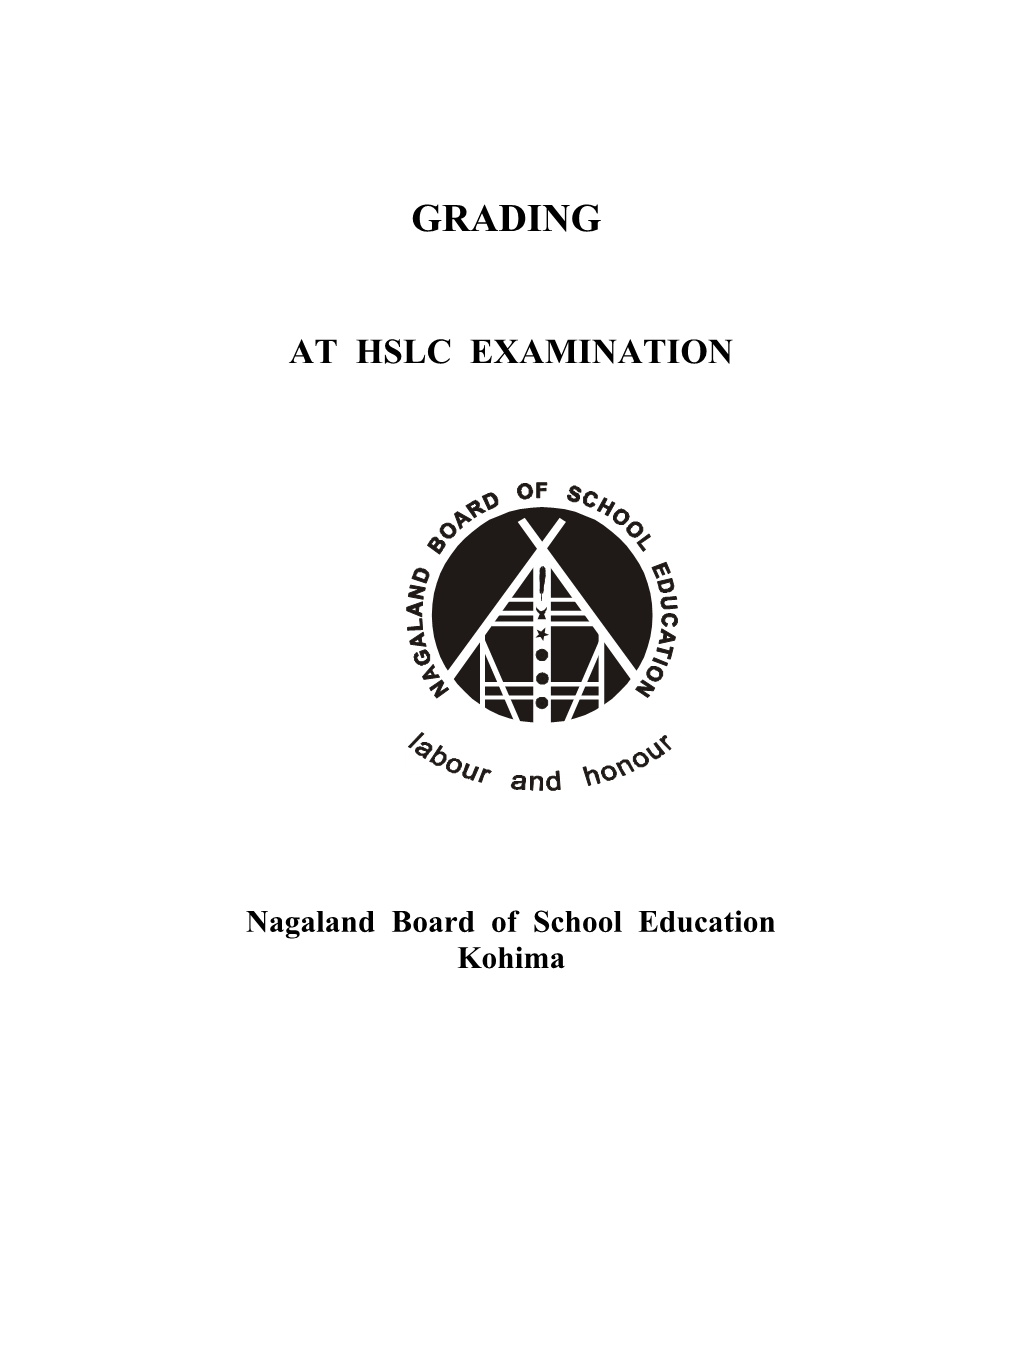 Grading in NBSE Examination